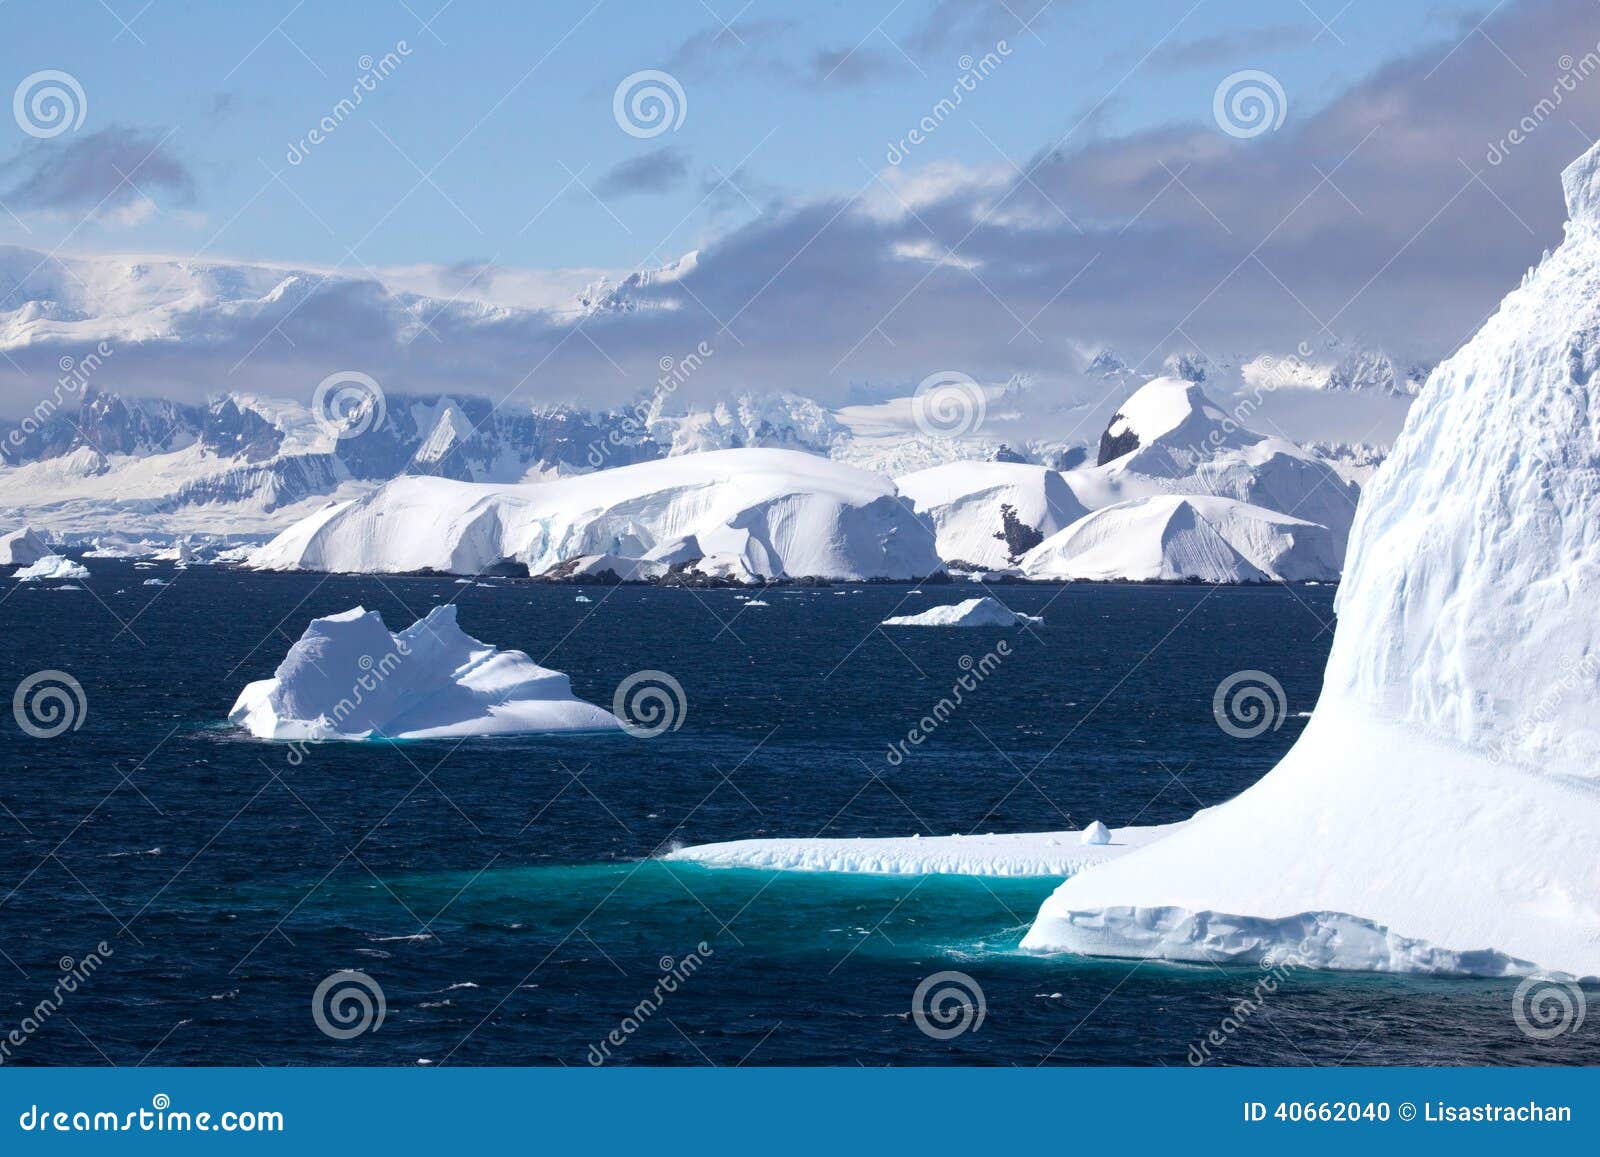 cruising down the gerlache strait, antarctica